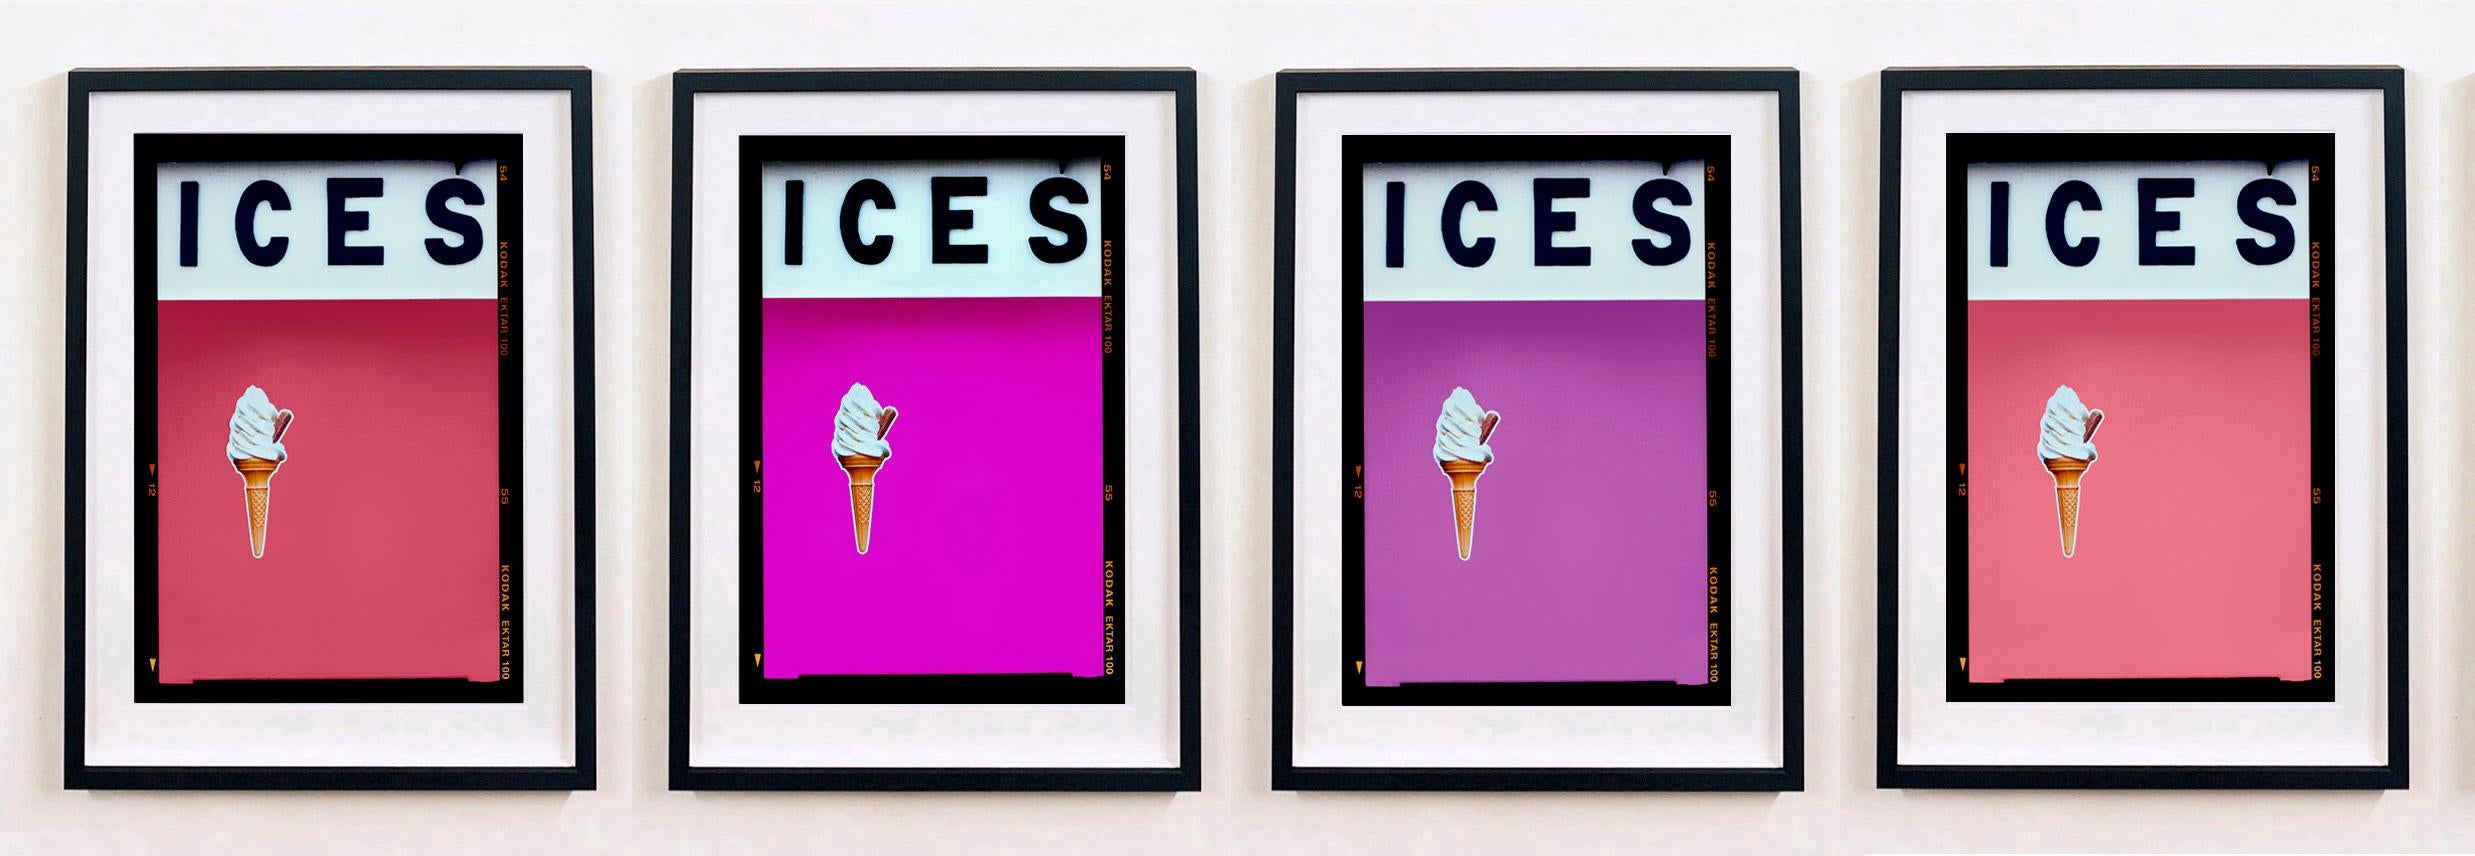 ICES - Four Framed Artworks - Pop Art Color Photography For Sale 1